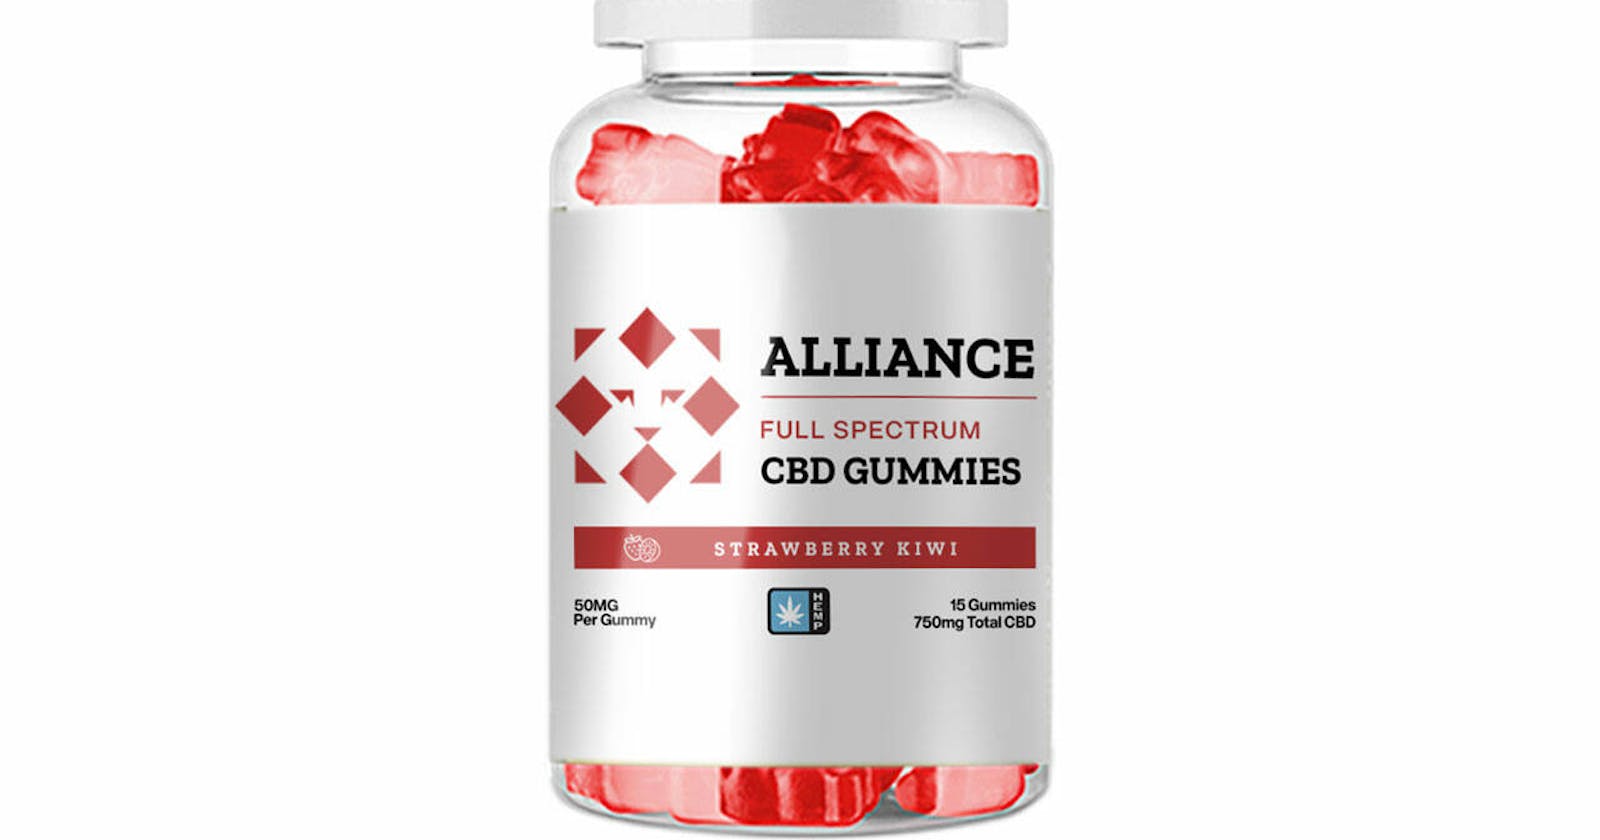 Alliance CBD Gummies : Multi Benefits Like Relieve Pain And Stress